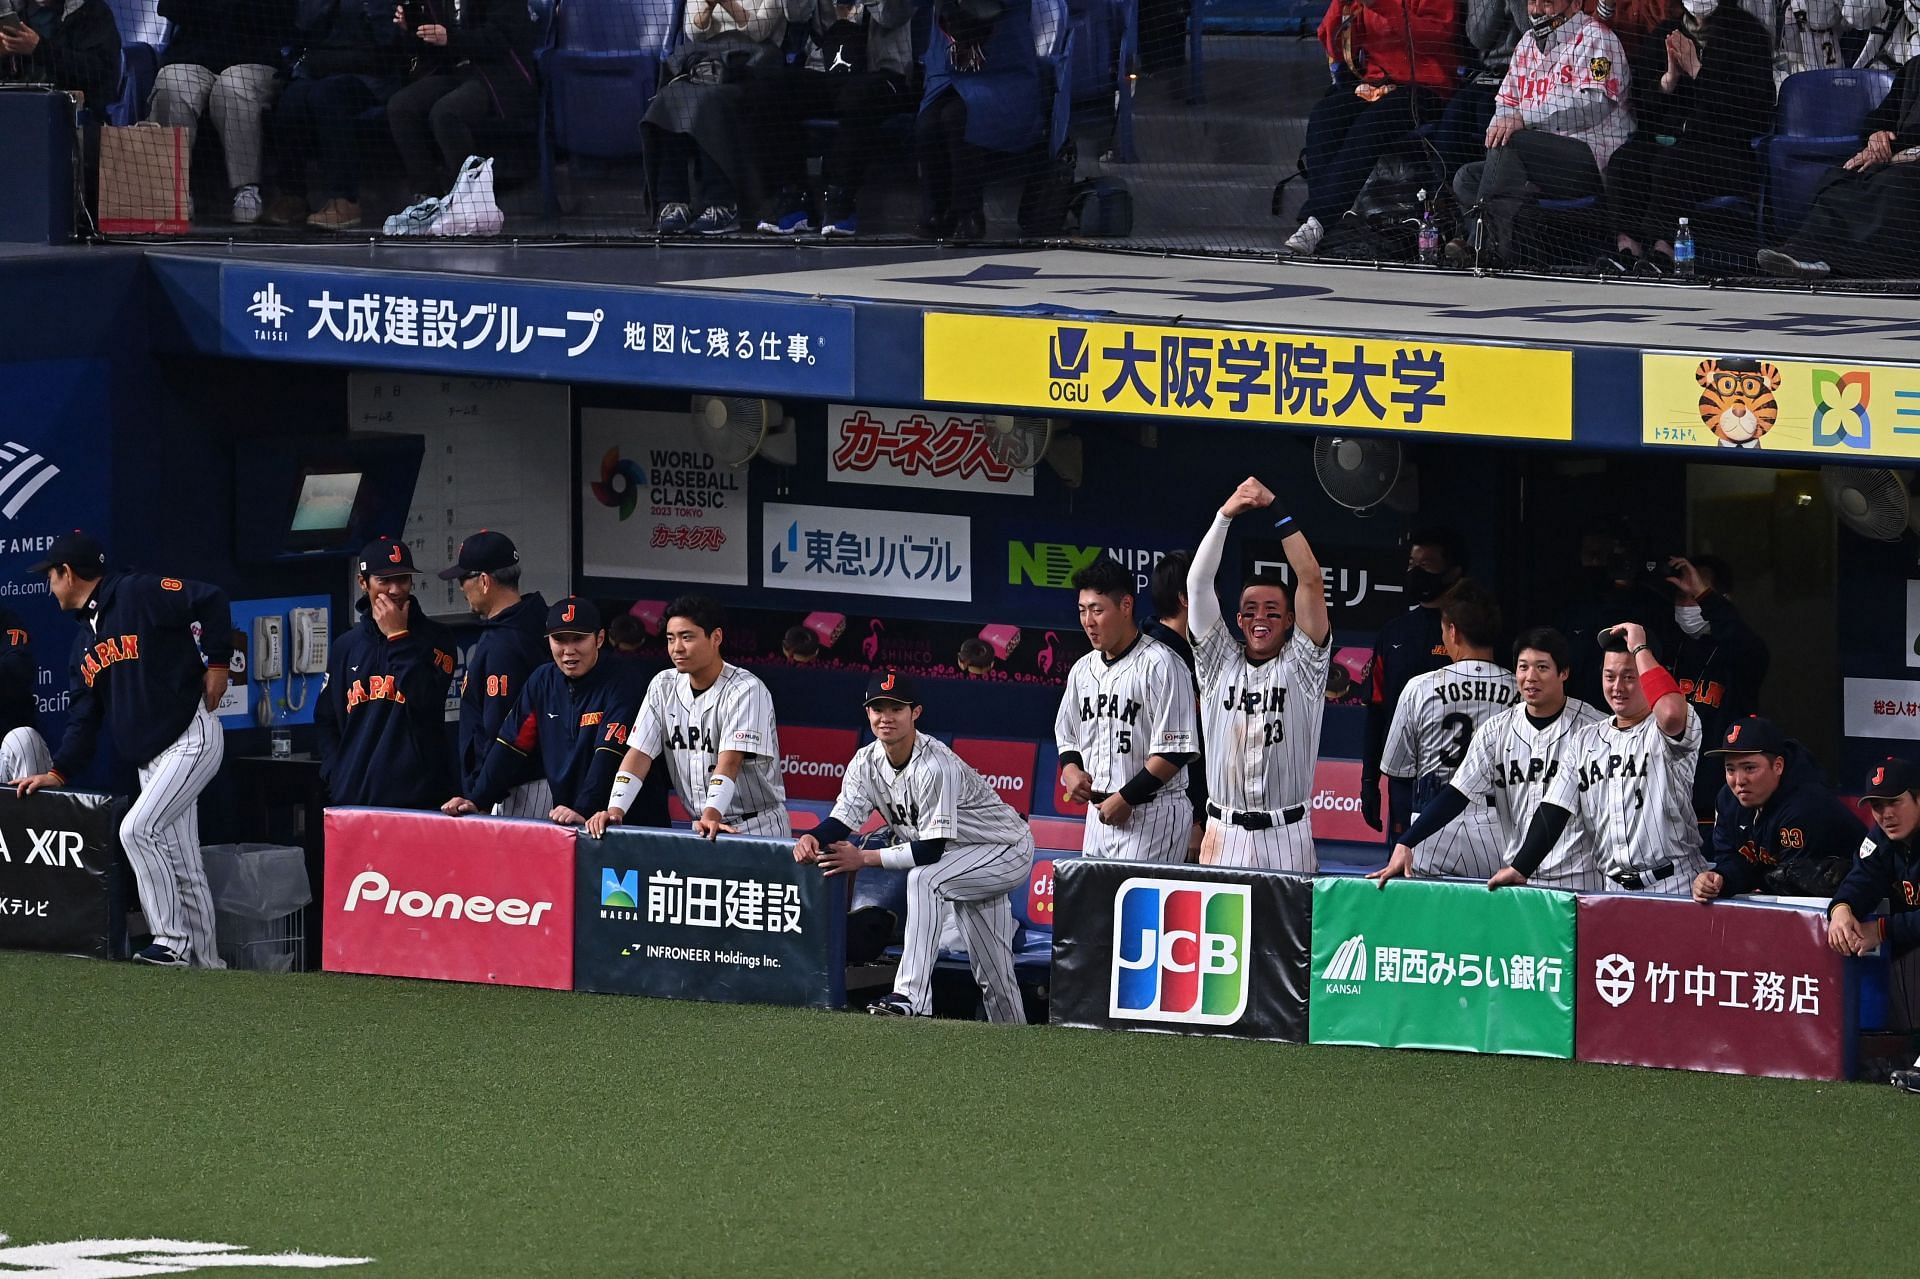 BASEBALL/ Nootbaar a.k.a. 'Tatsuji' captures hearts and minds of Japanese  fans